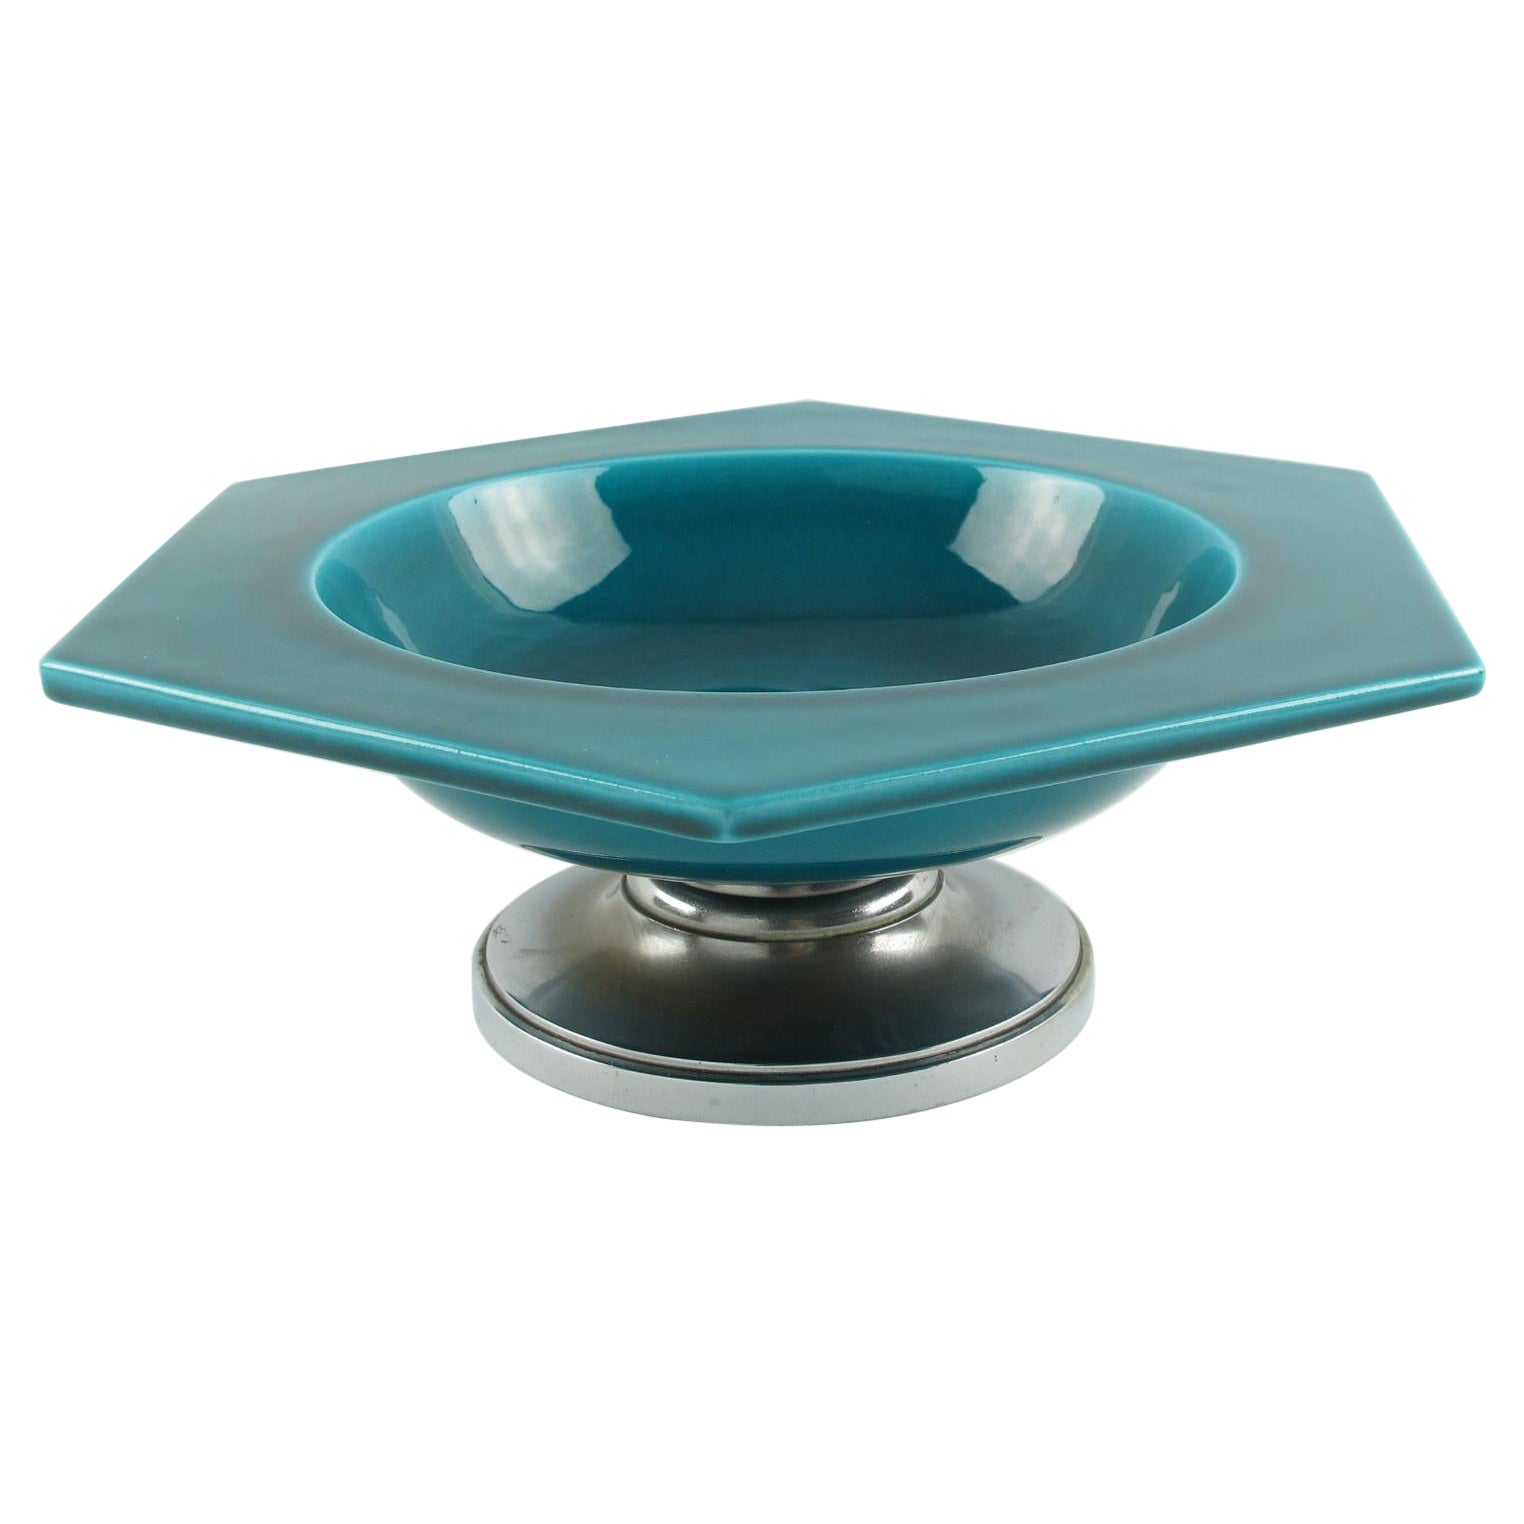 Paul Milet for Sevres Art Deco Bronze and Turquoise Ceramic Centerpiece Bowl